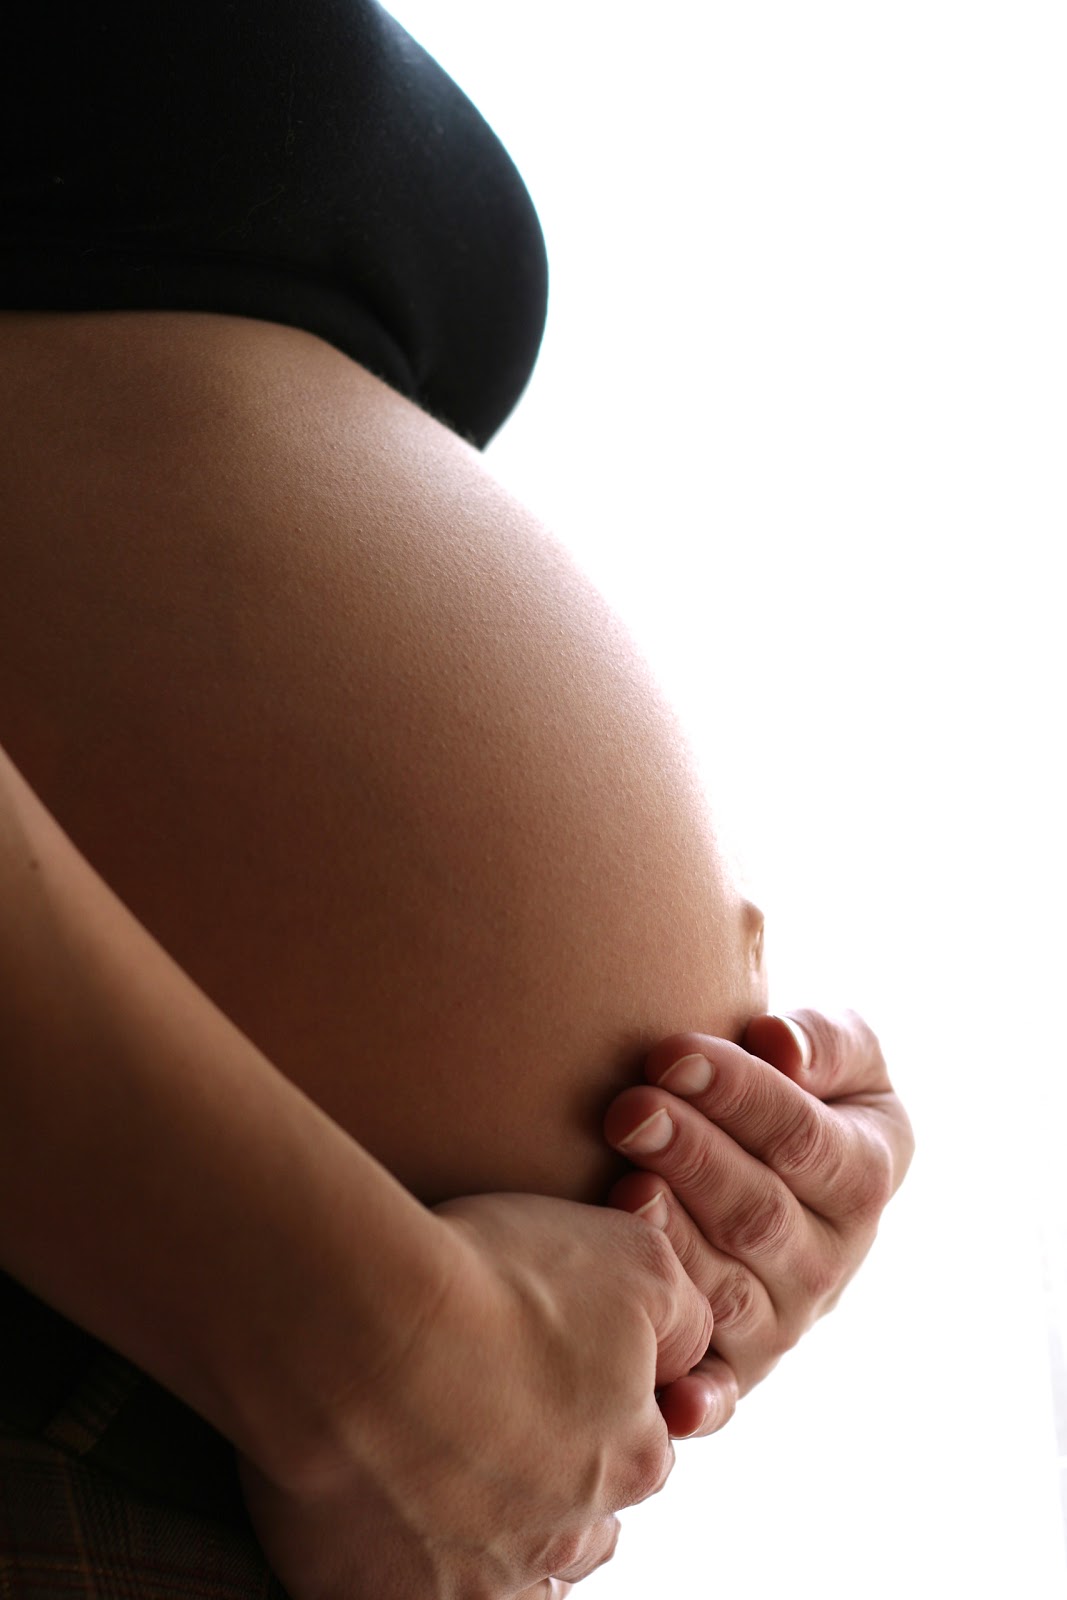 http://4.bp.blogspot.com/_PX0prAHl0hg/TUqBgUYJMII/AAAAAAAAAq0/2EHlQTGlgaE/s1600/pregnant-woman1.jpg